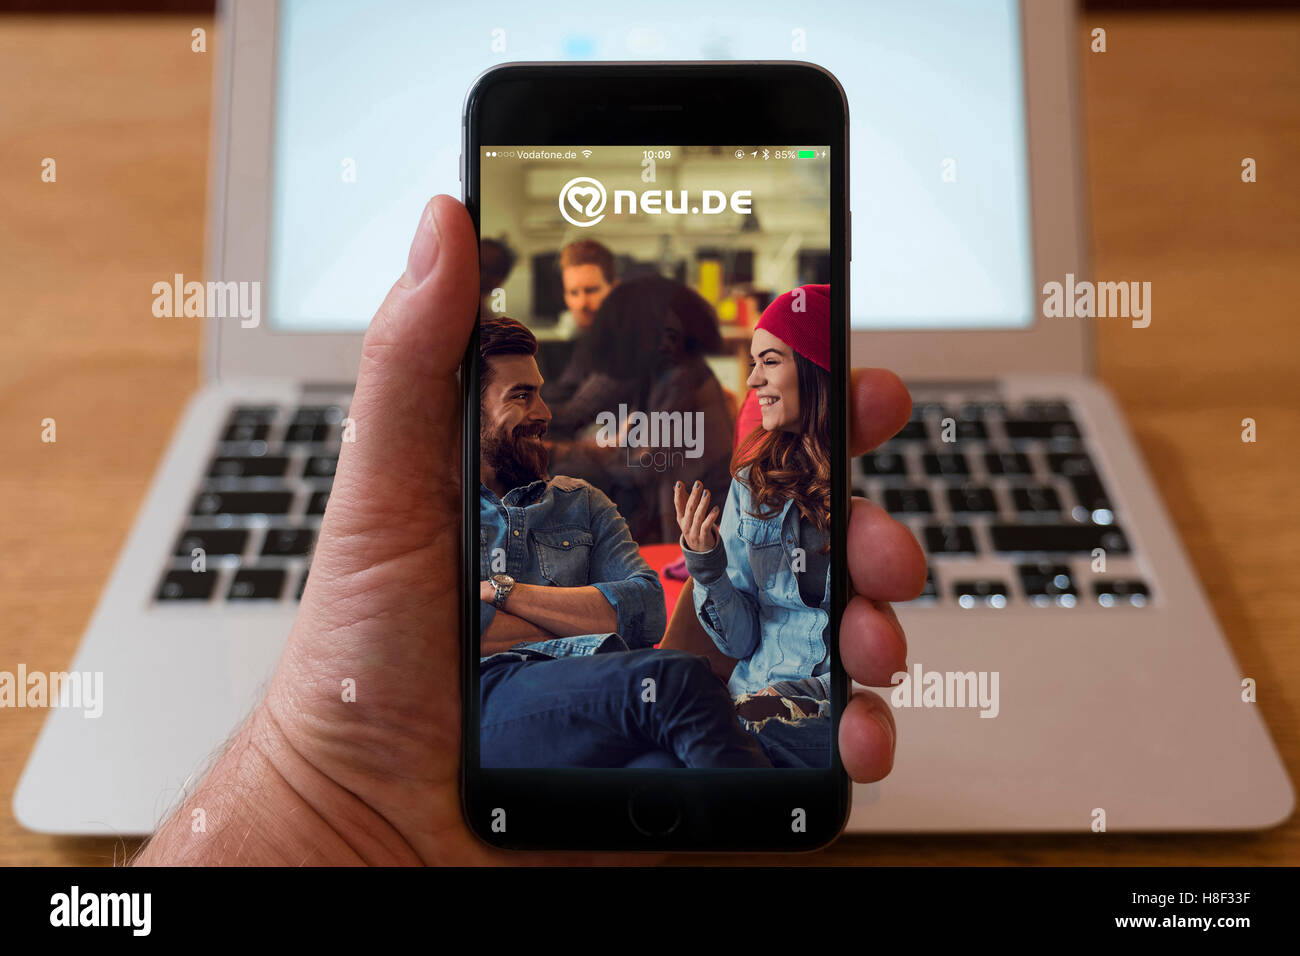 Dettaglio del tedesco internet dating website app Neu.de su un iPhone e smart phone Foto Stock